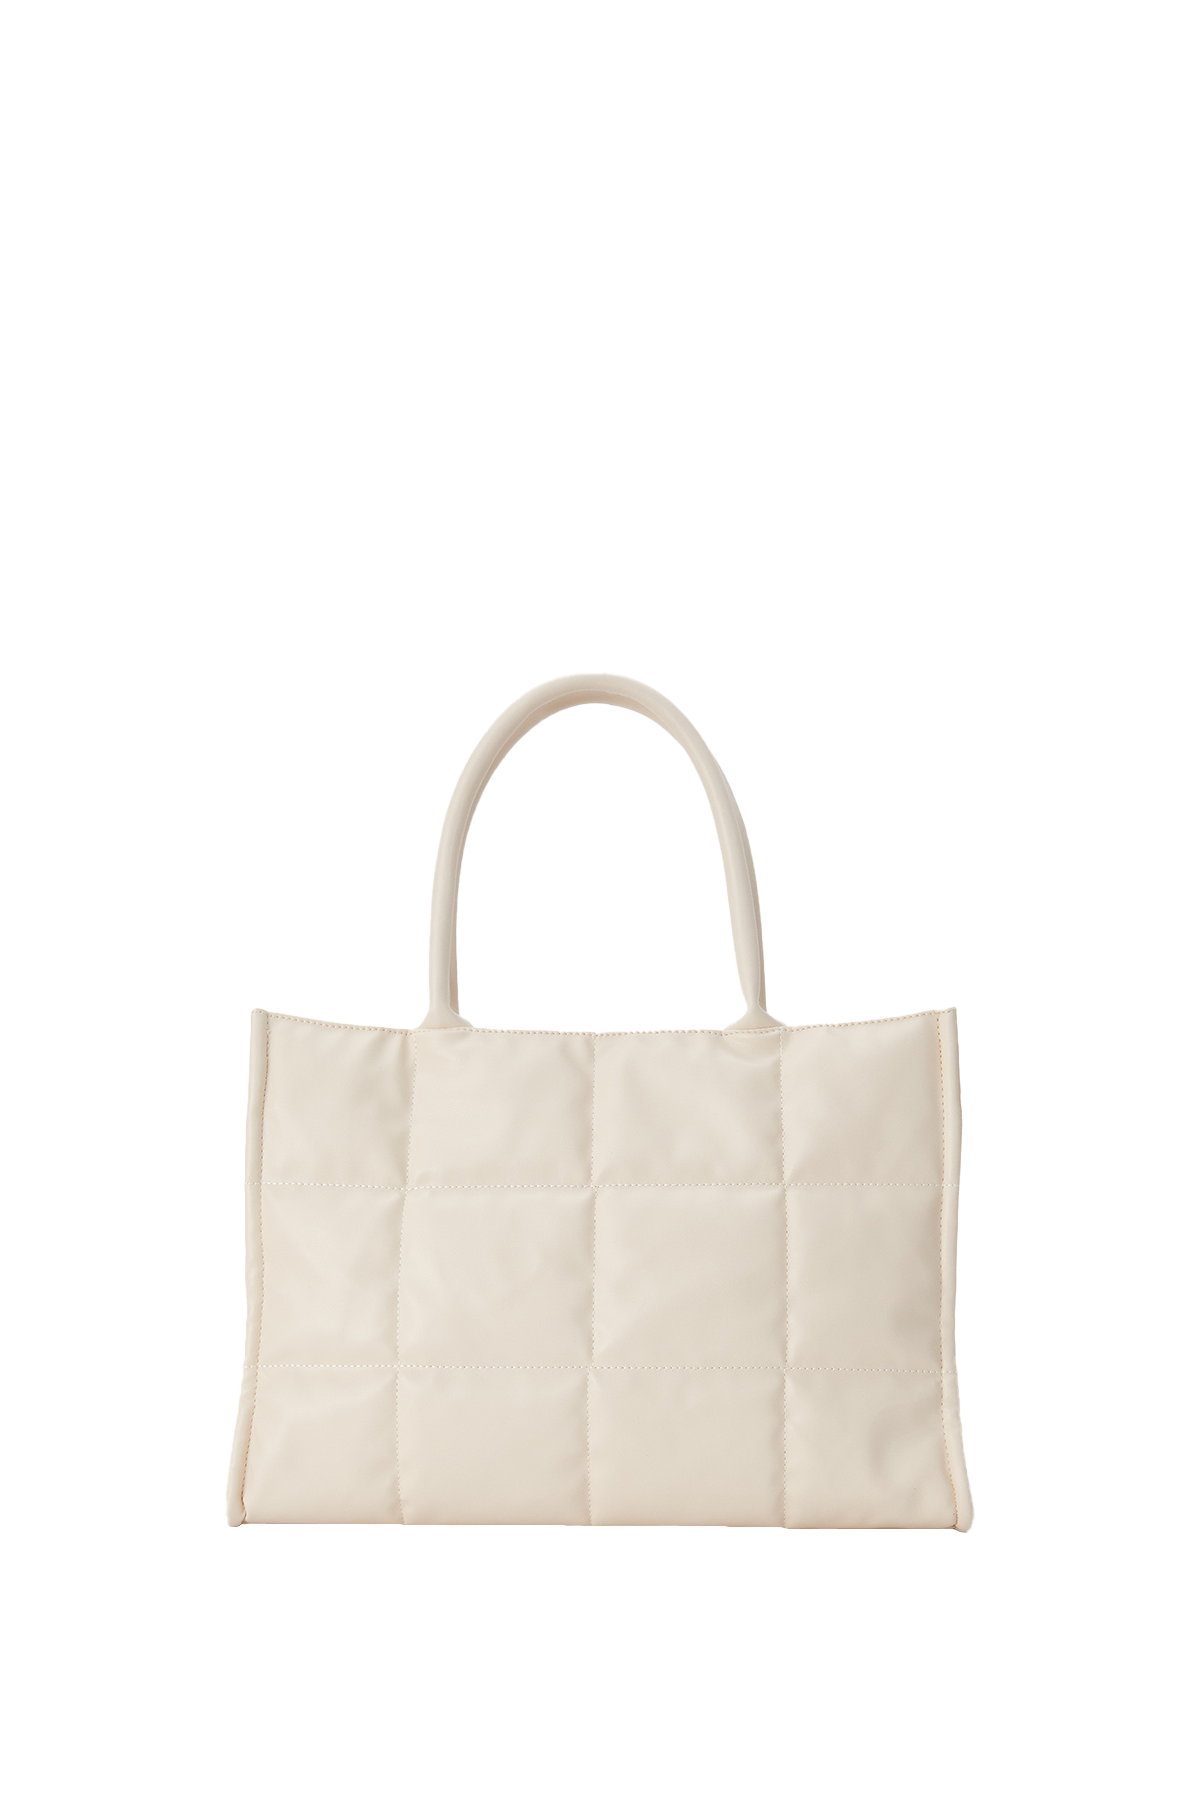 Quilted Vegan Leather Tote Bag - Cream